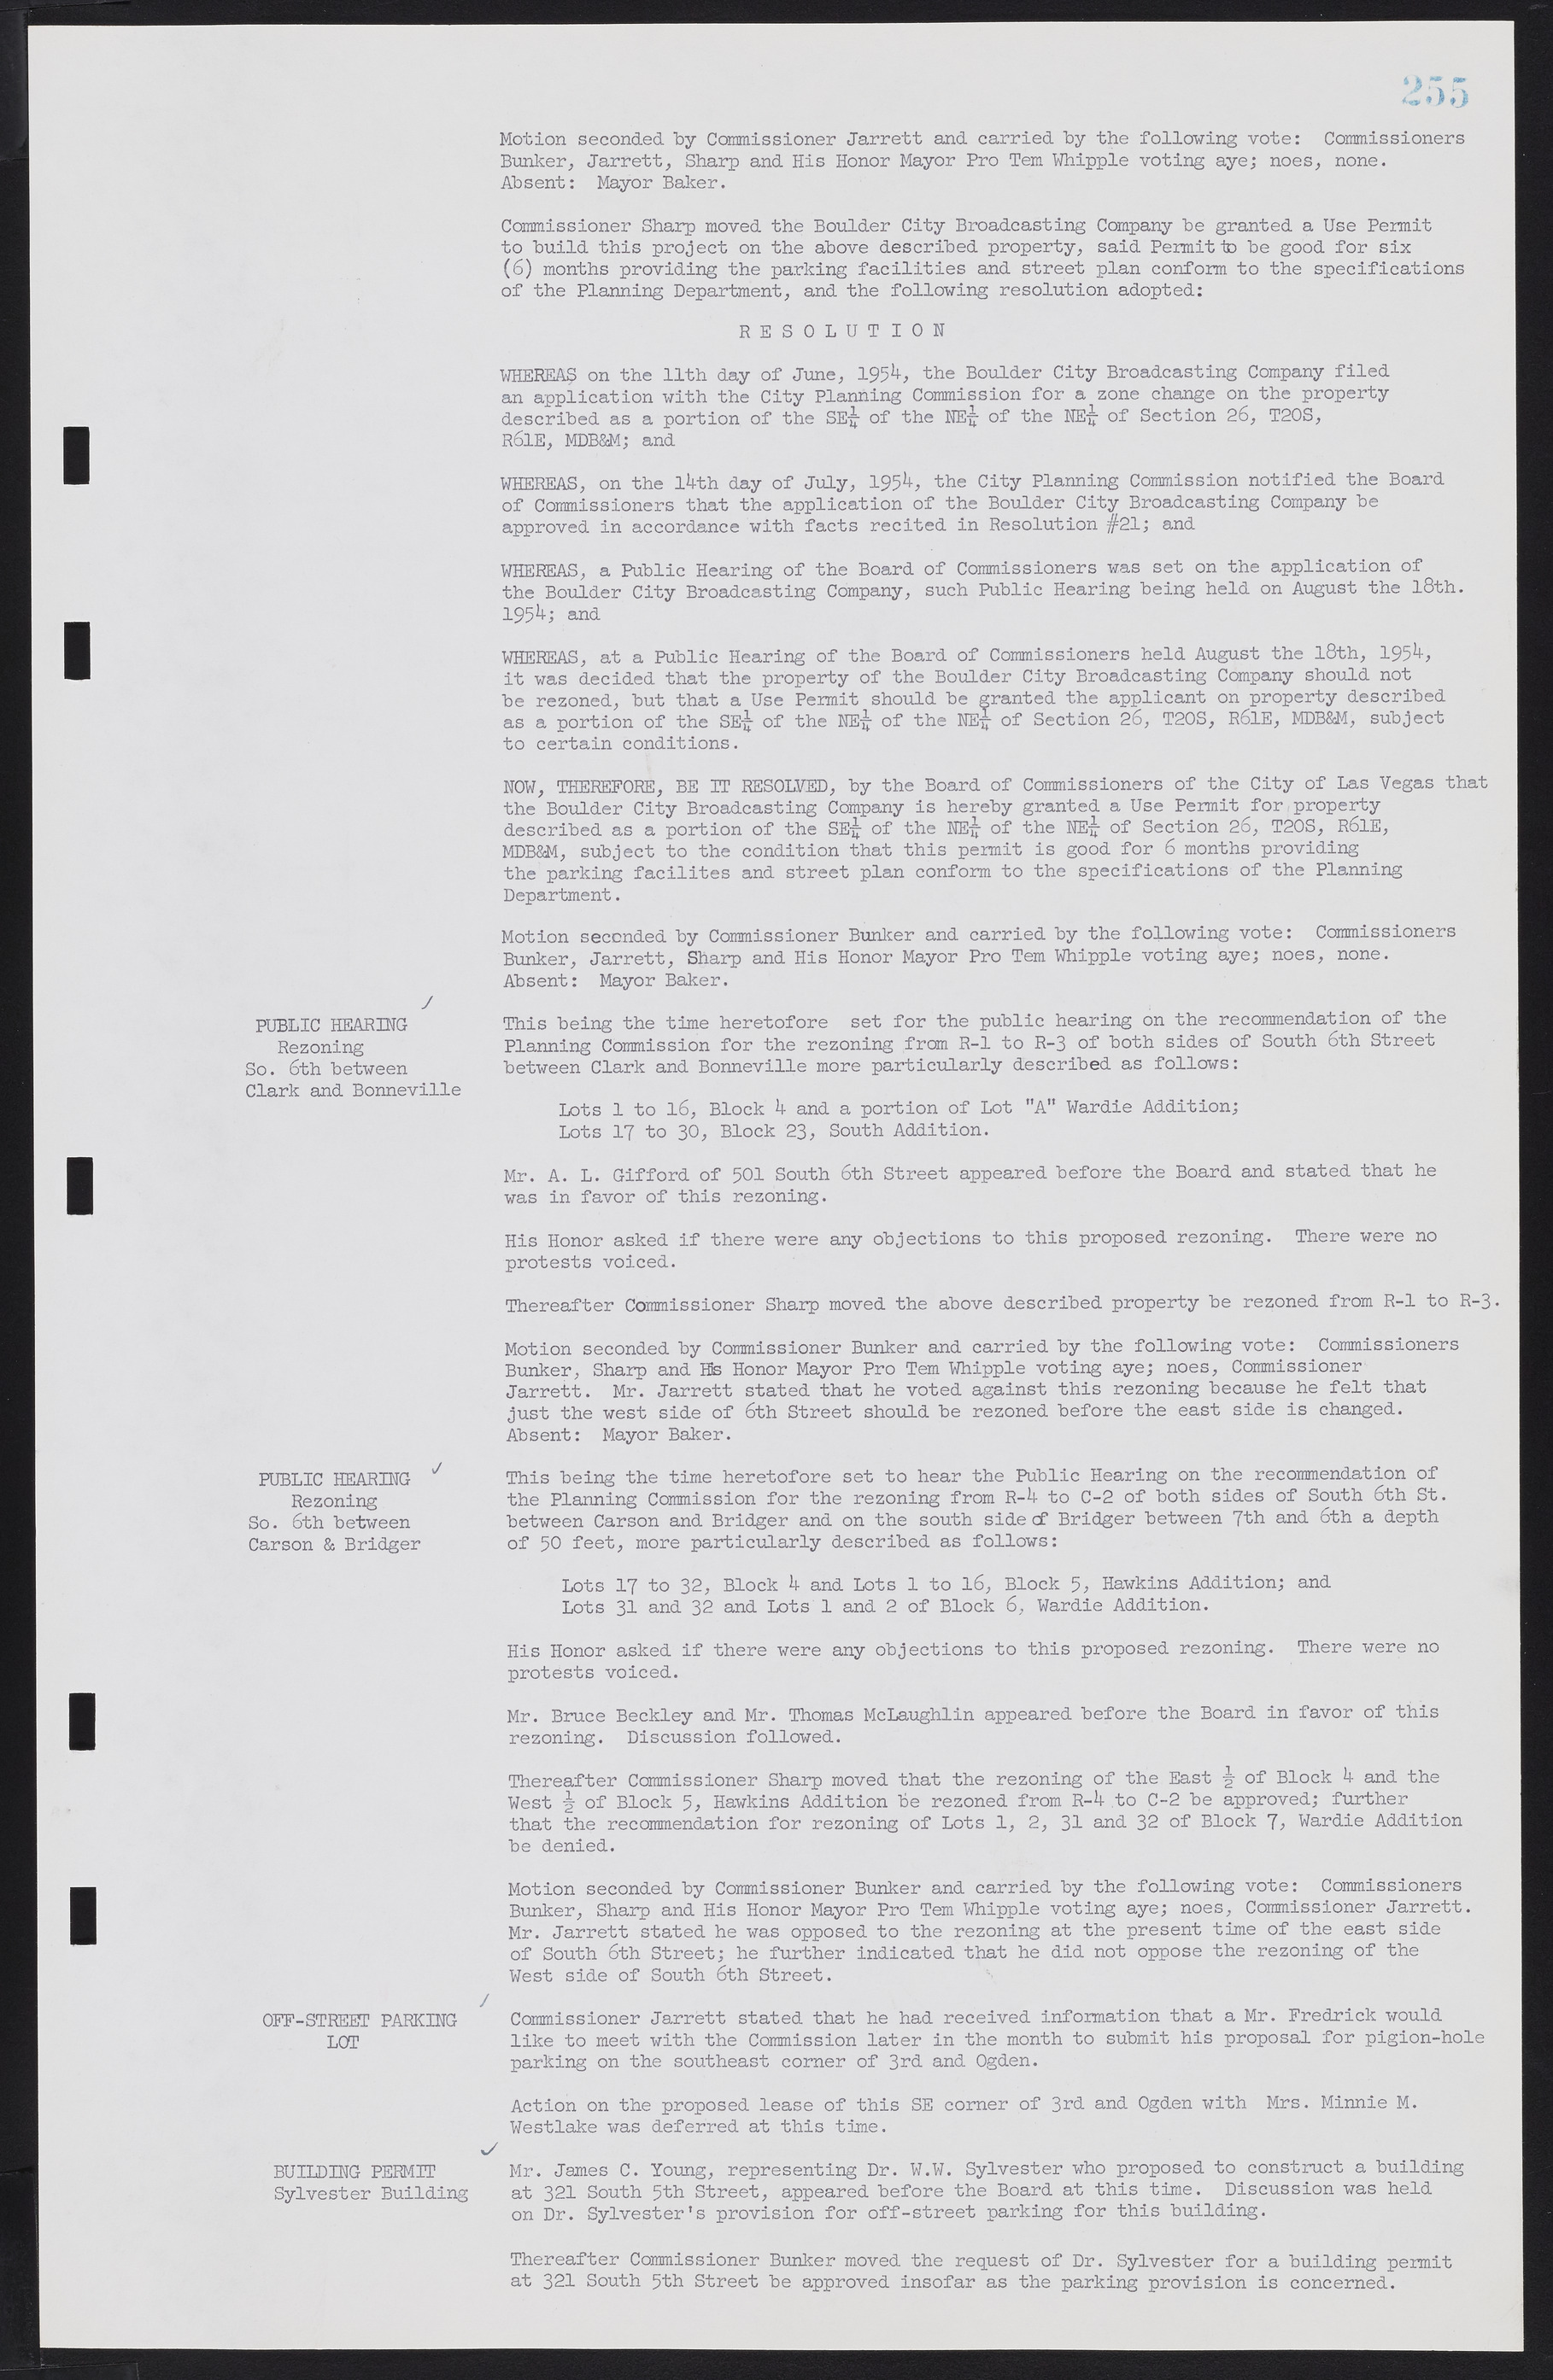 Las Vegas City Commission Minutes, February 17, 1954 to September 21, 1955, lvc000009-261